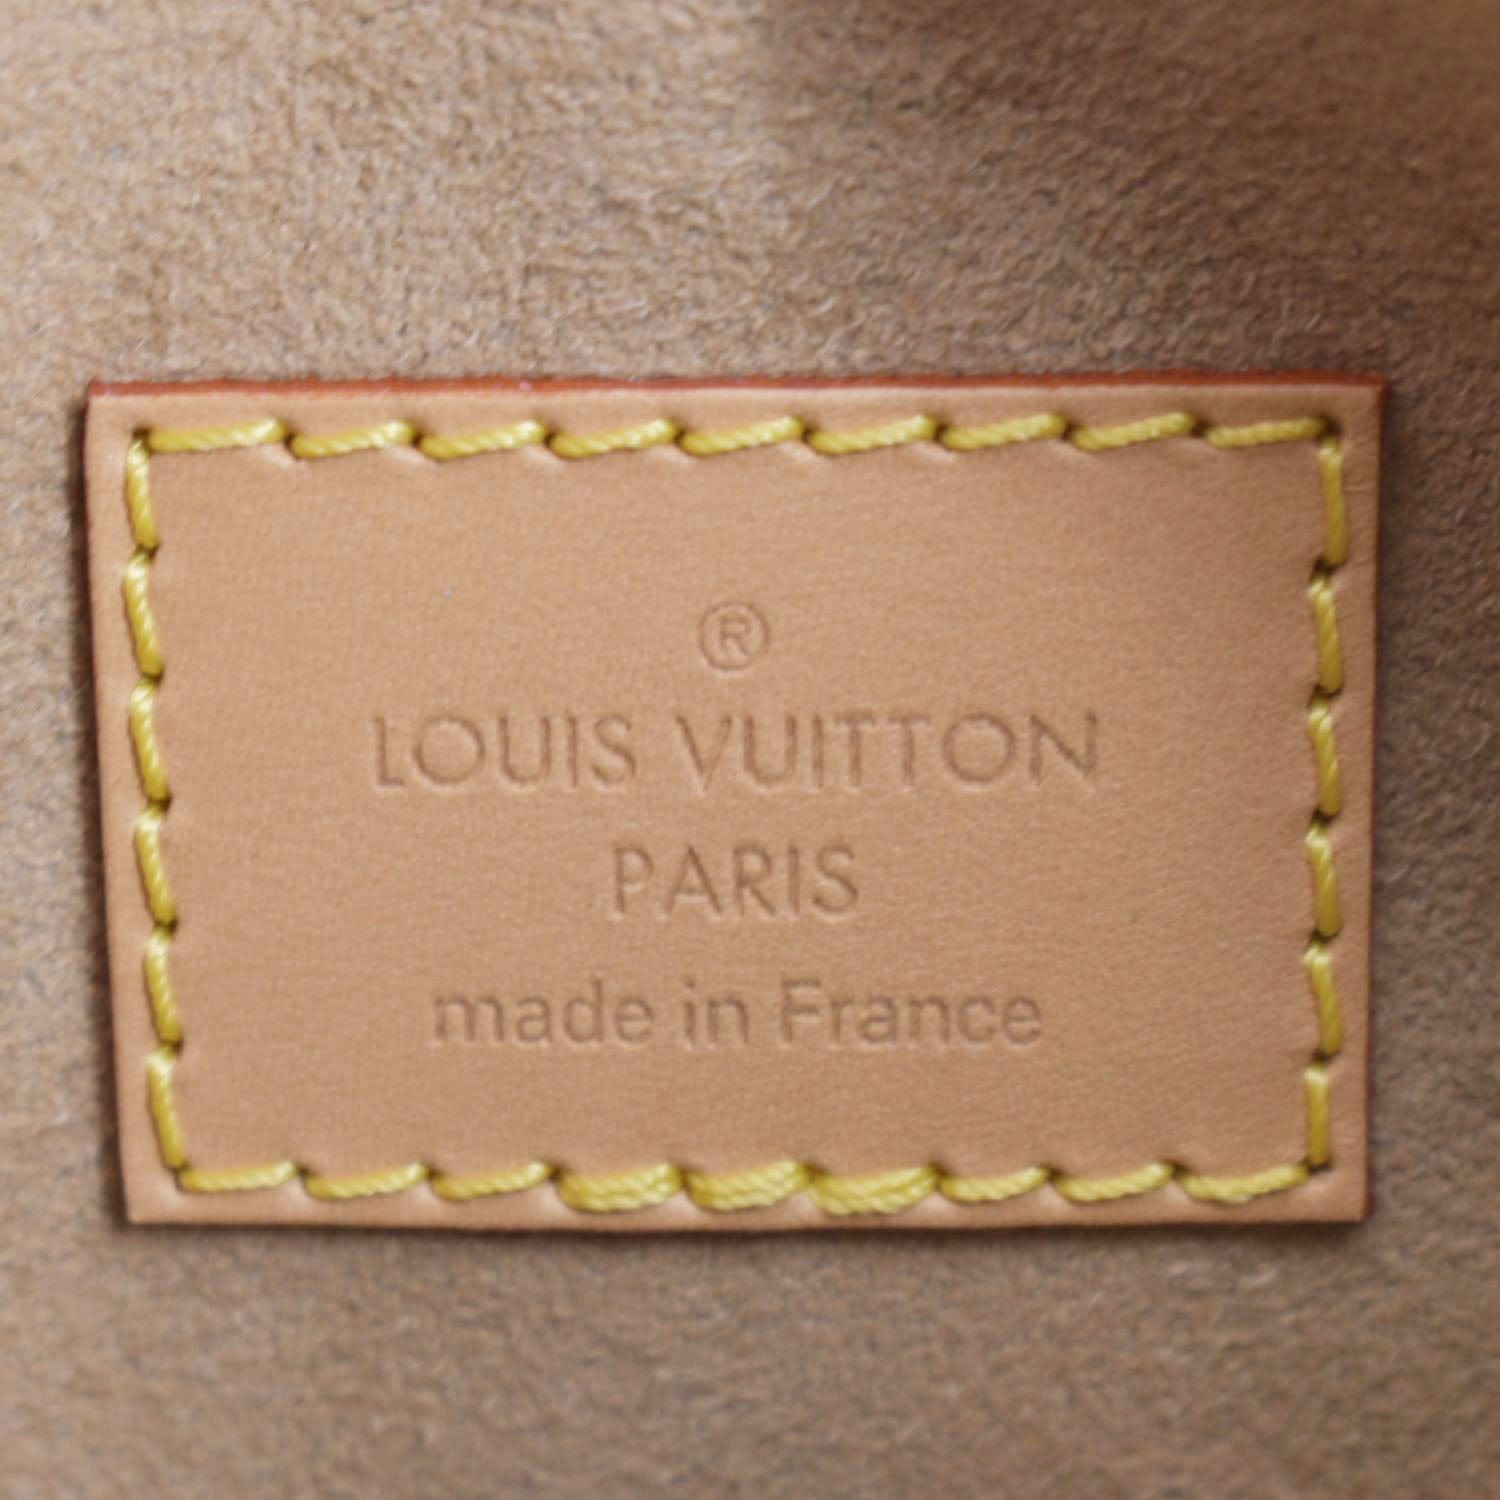 Louis Vuitton Baguette Bags & Handbags for Women, Authenticity Guaranteed